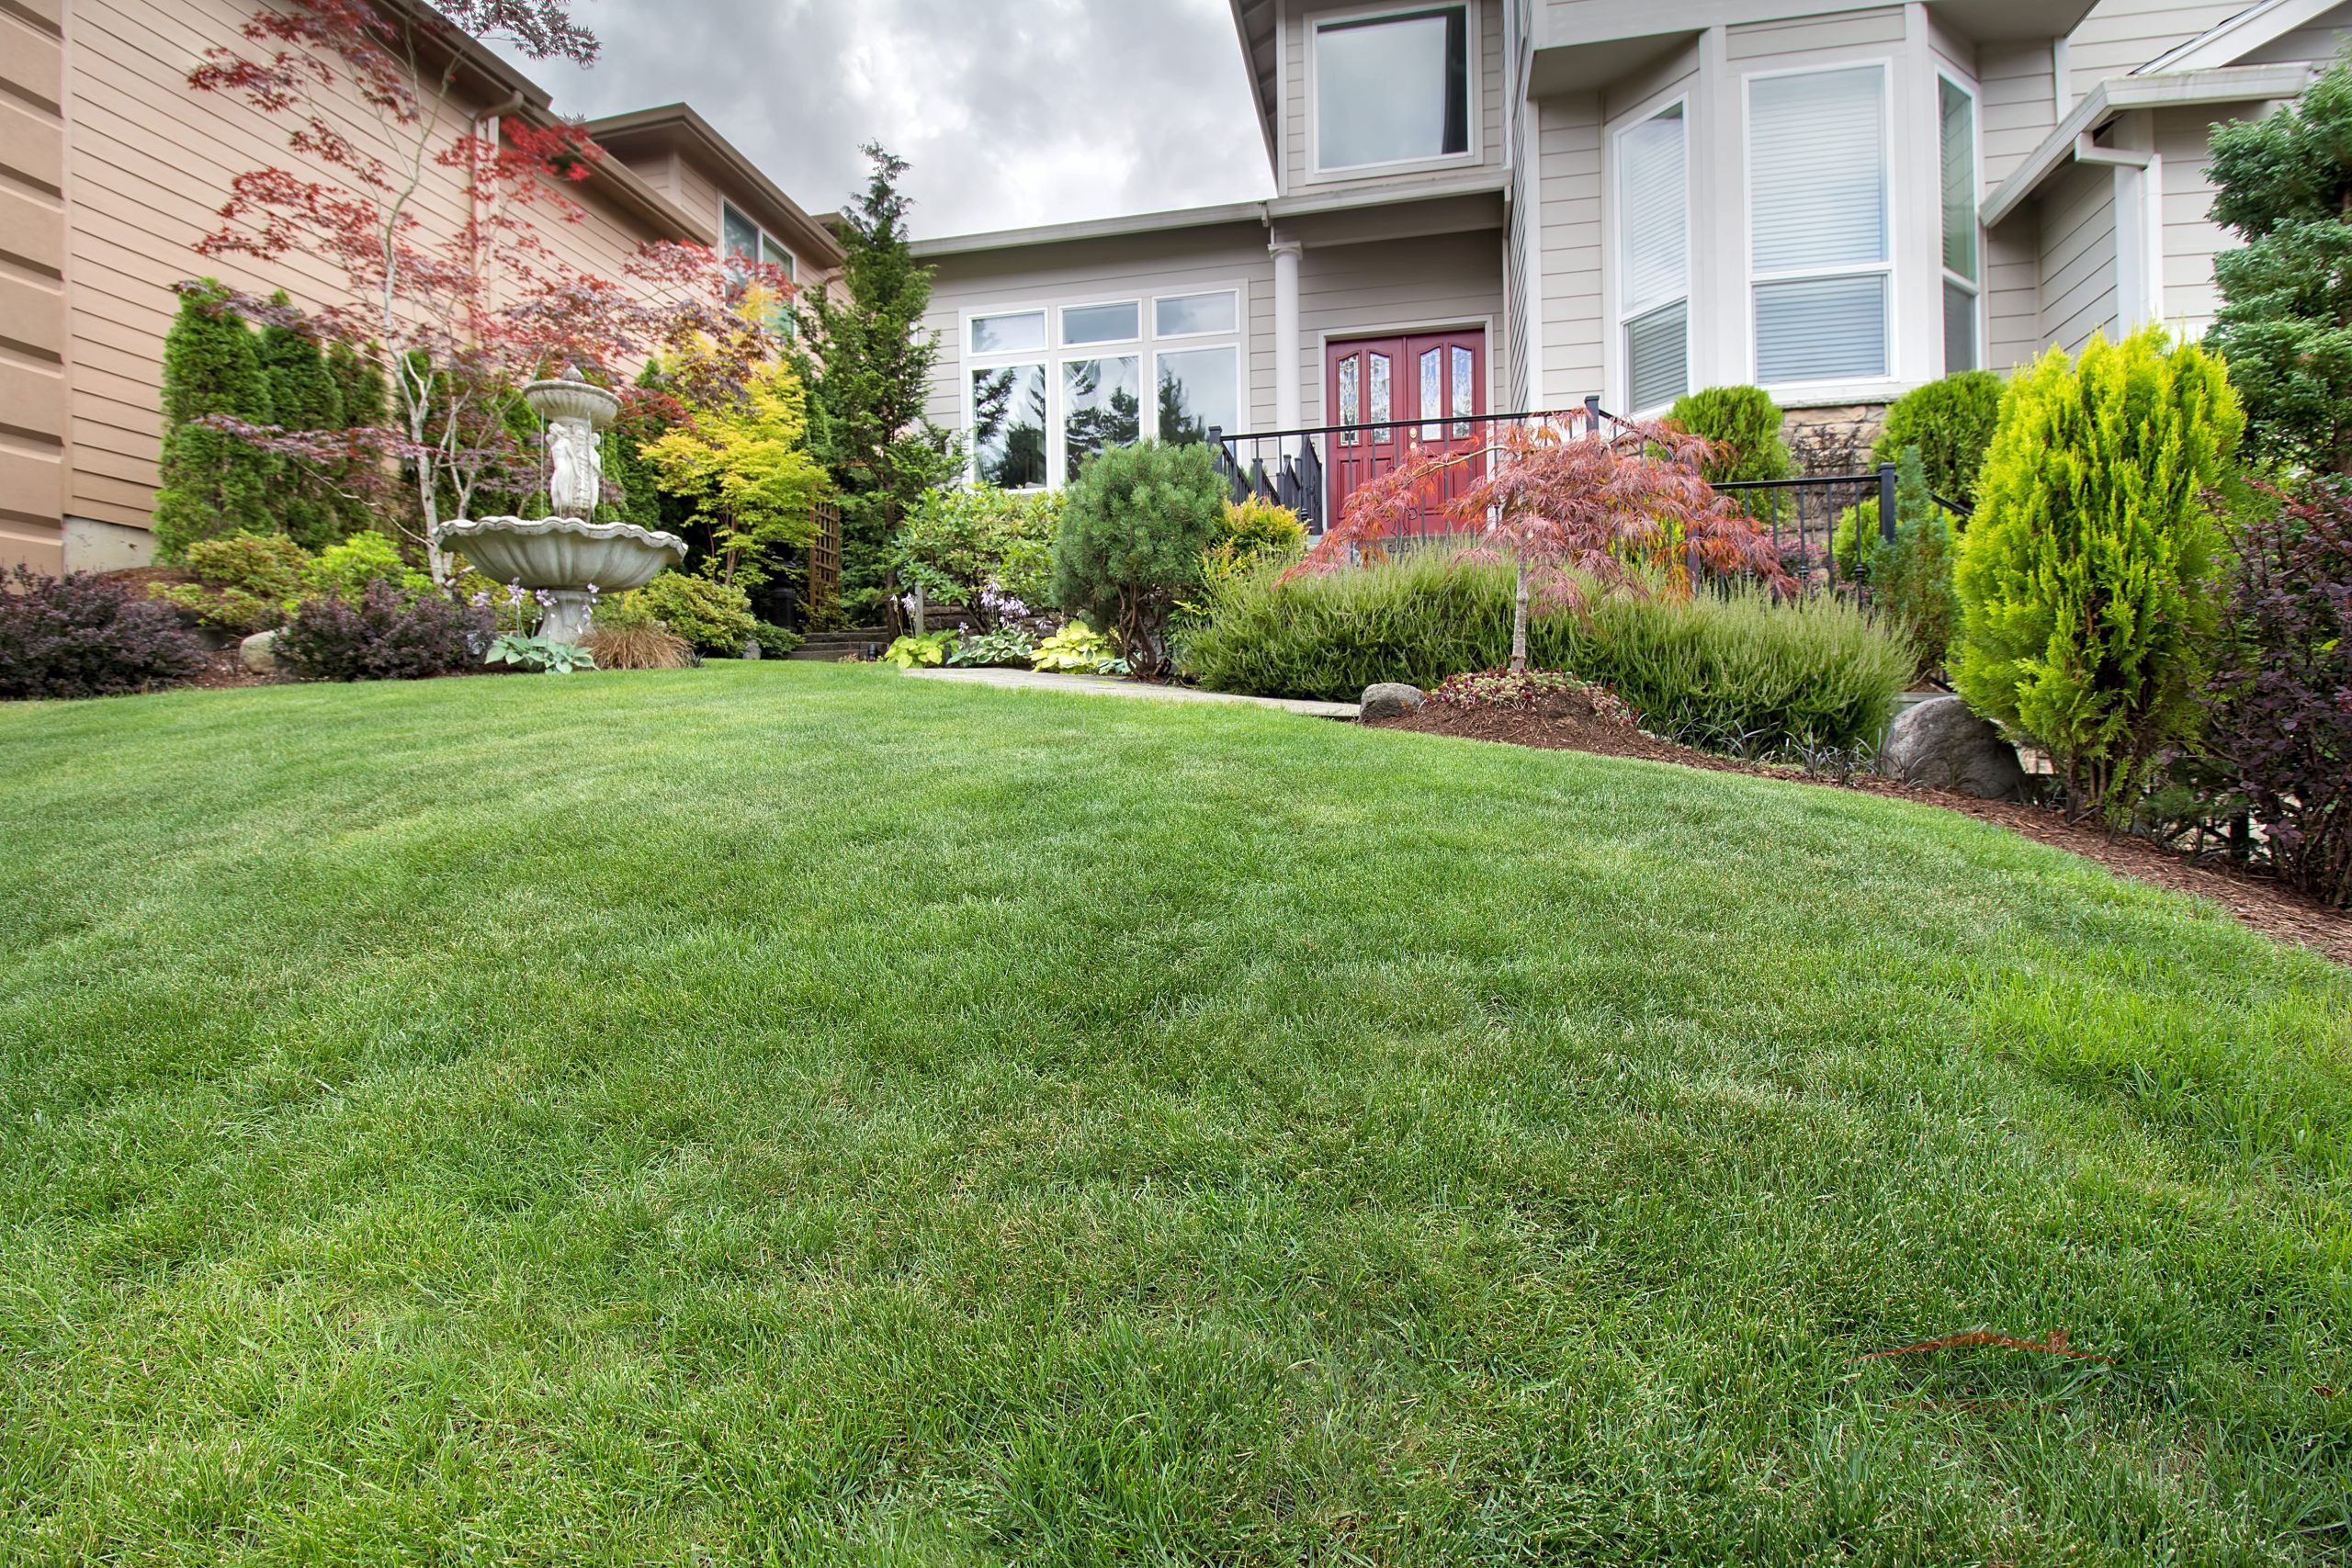 Green Grass Lawn in Manicured Frontyard Garden